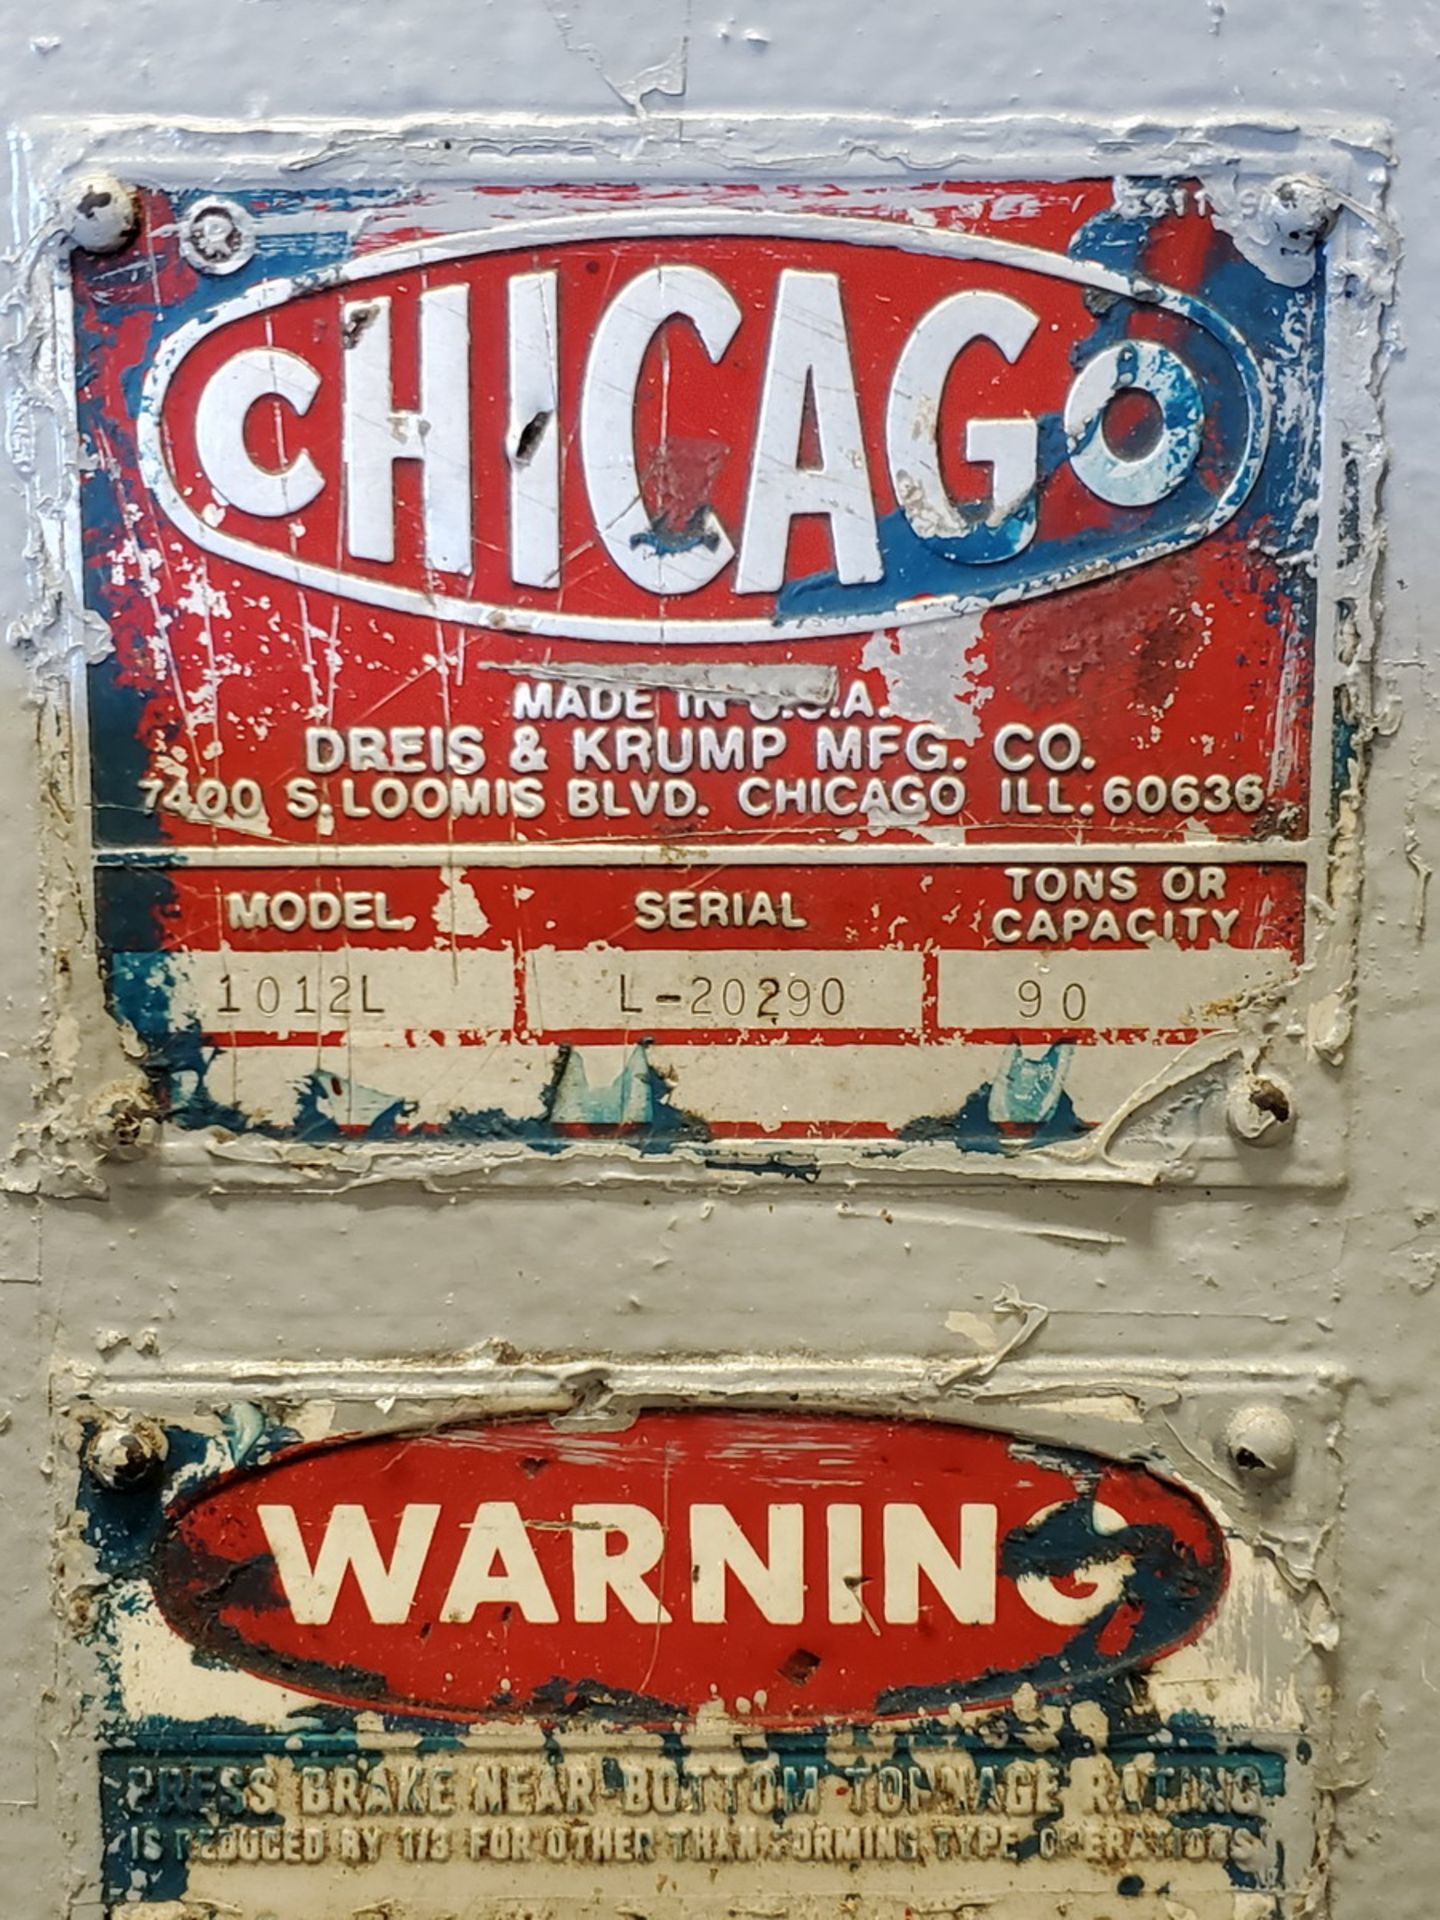 90 Ton x 12' Chicago Dreis & Krump Mechanical Press Brake - Image 8 of 8